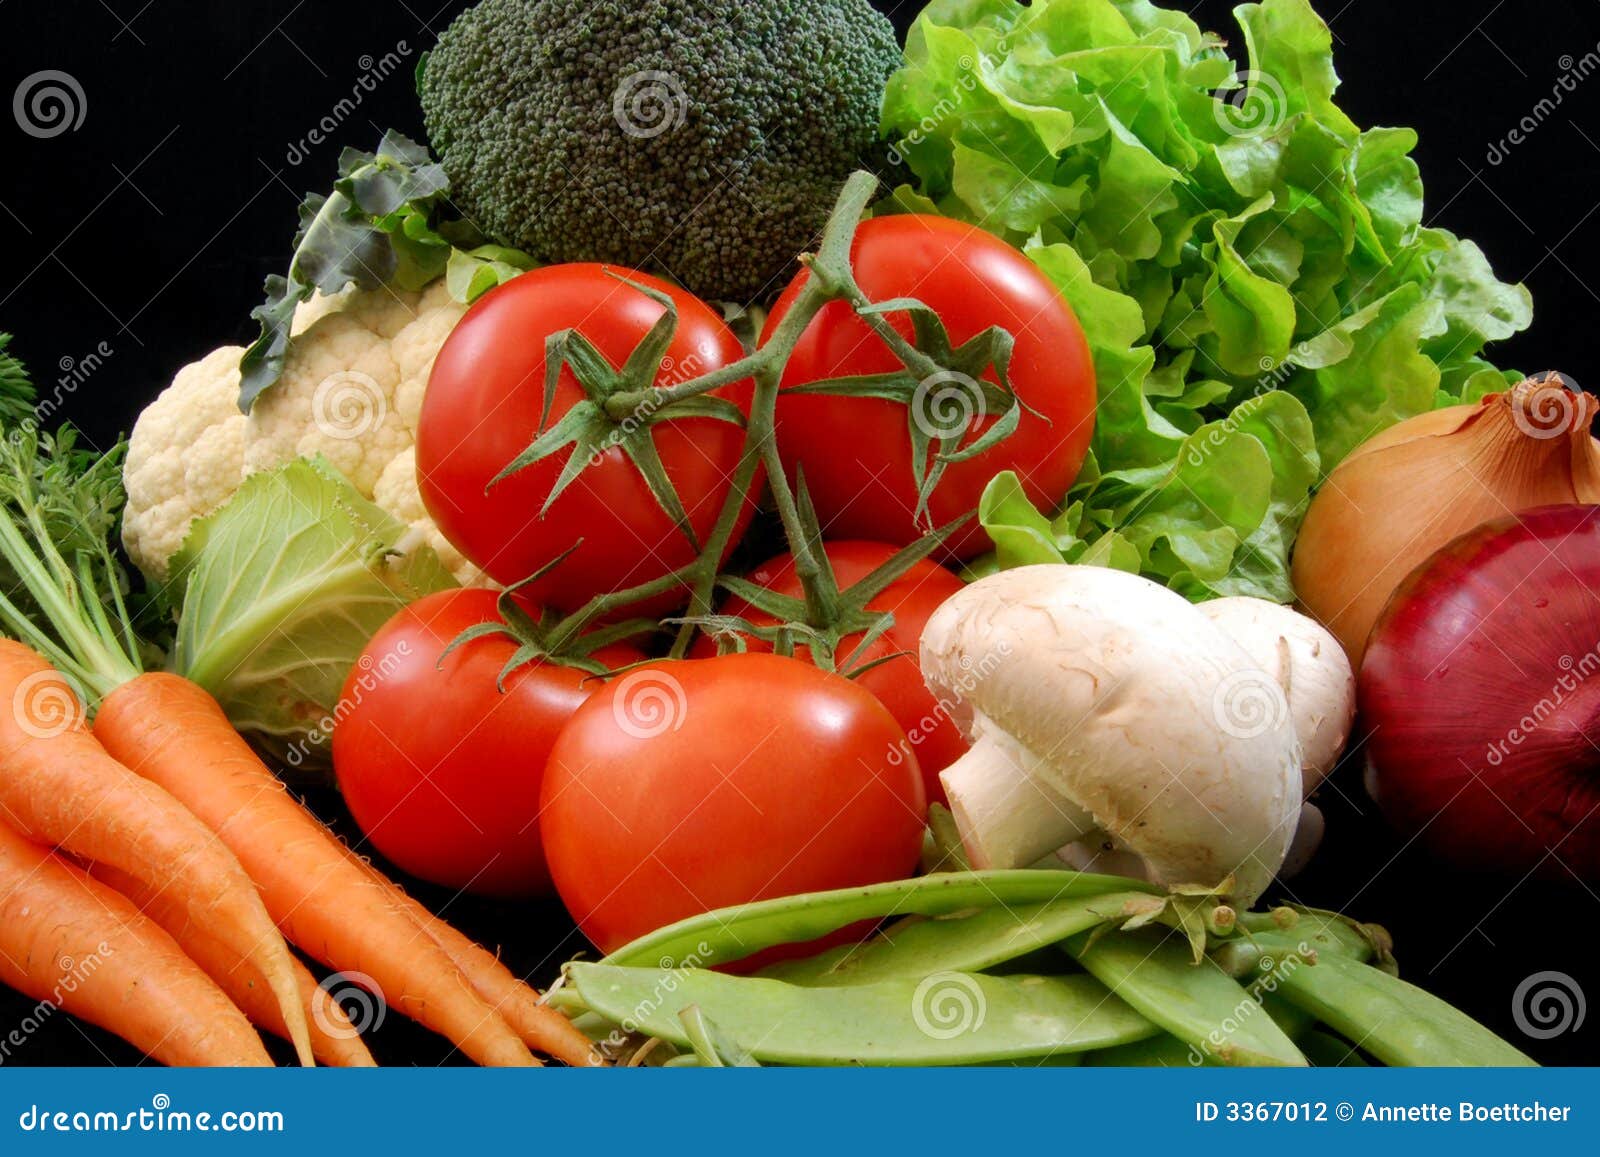 fresh healthy vegetables